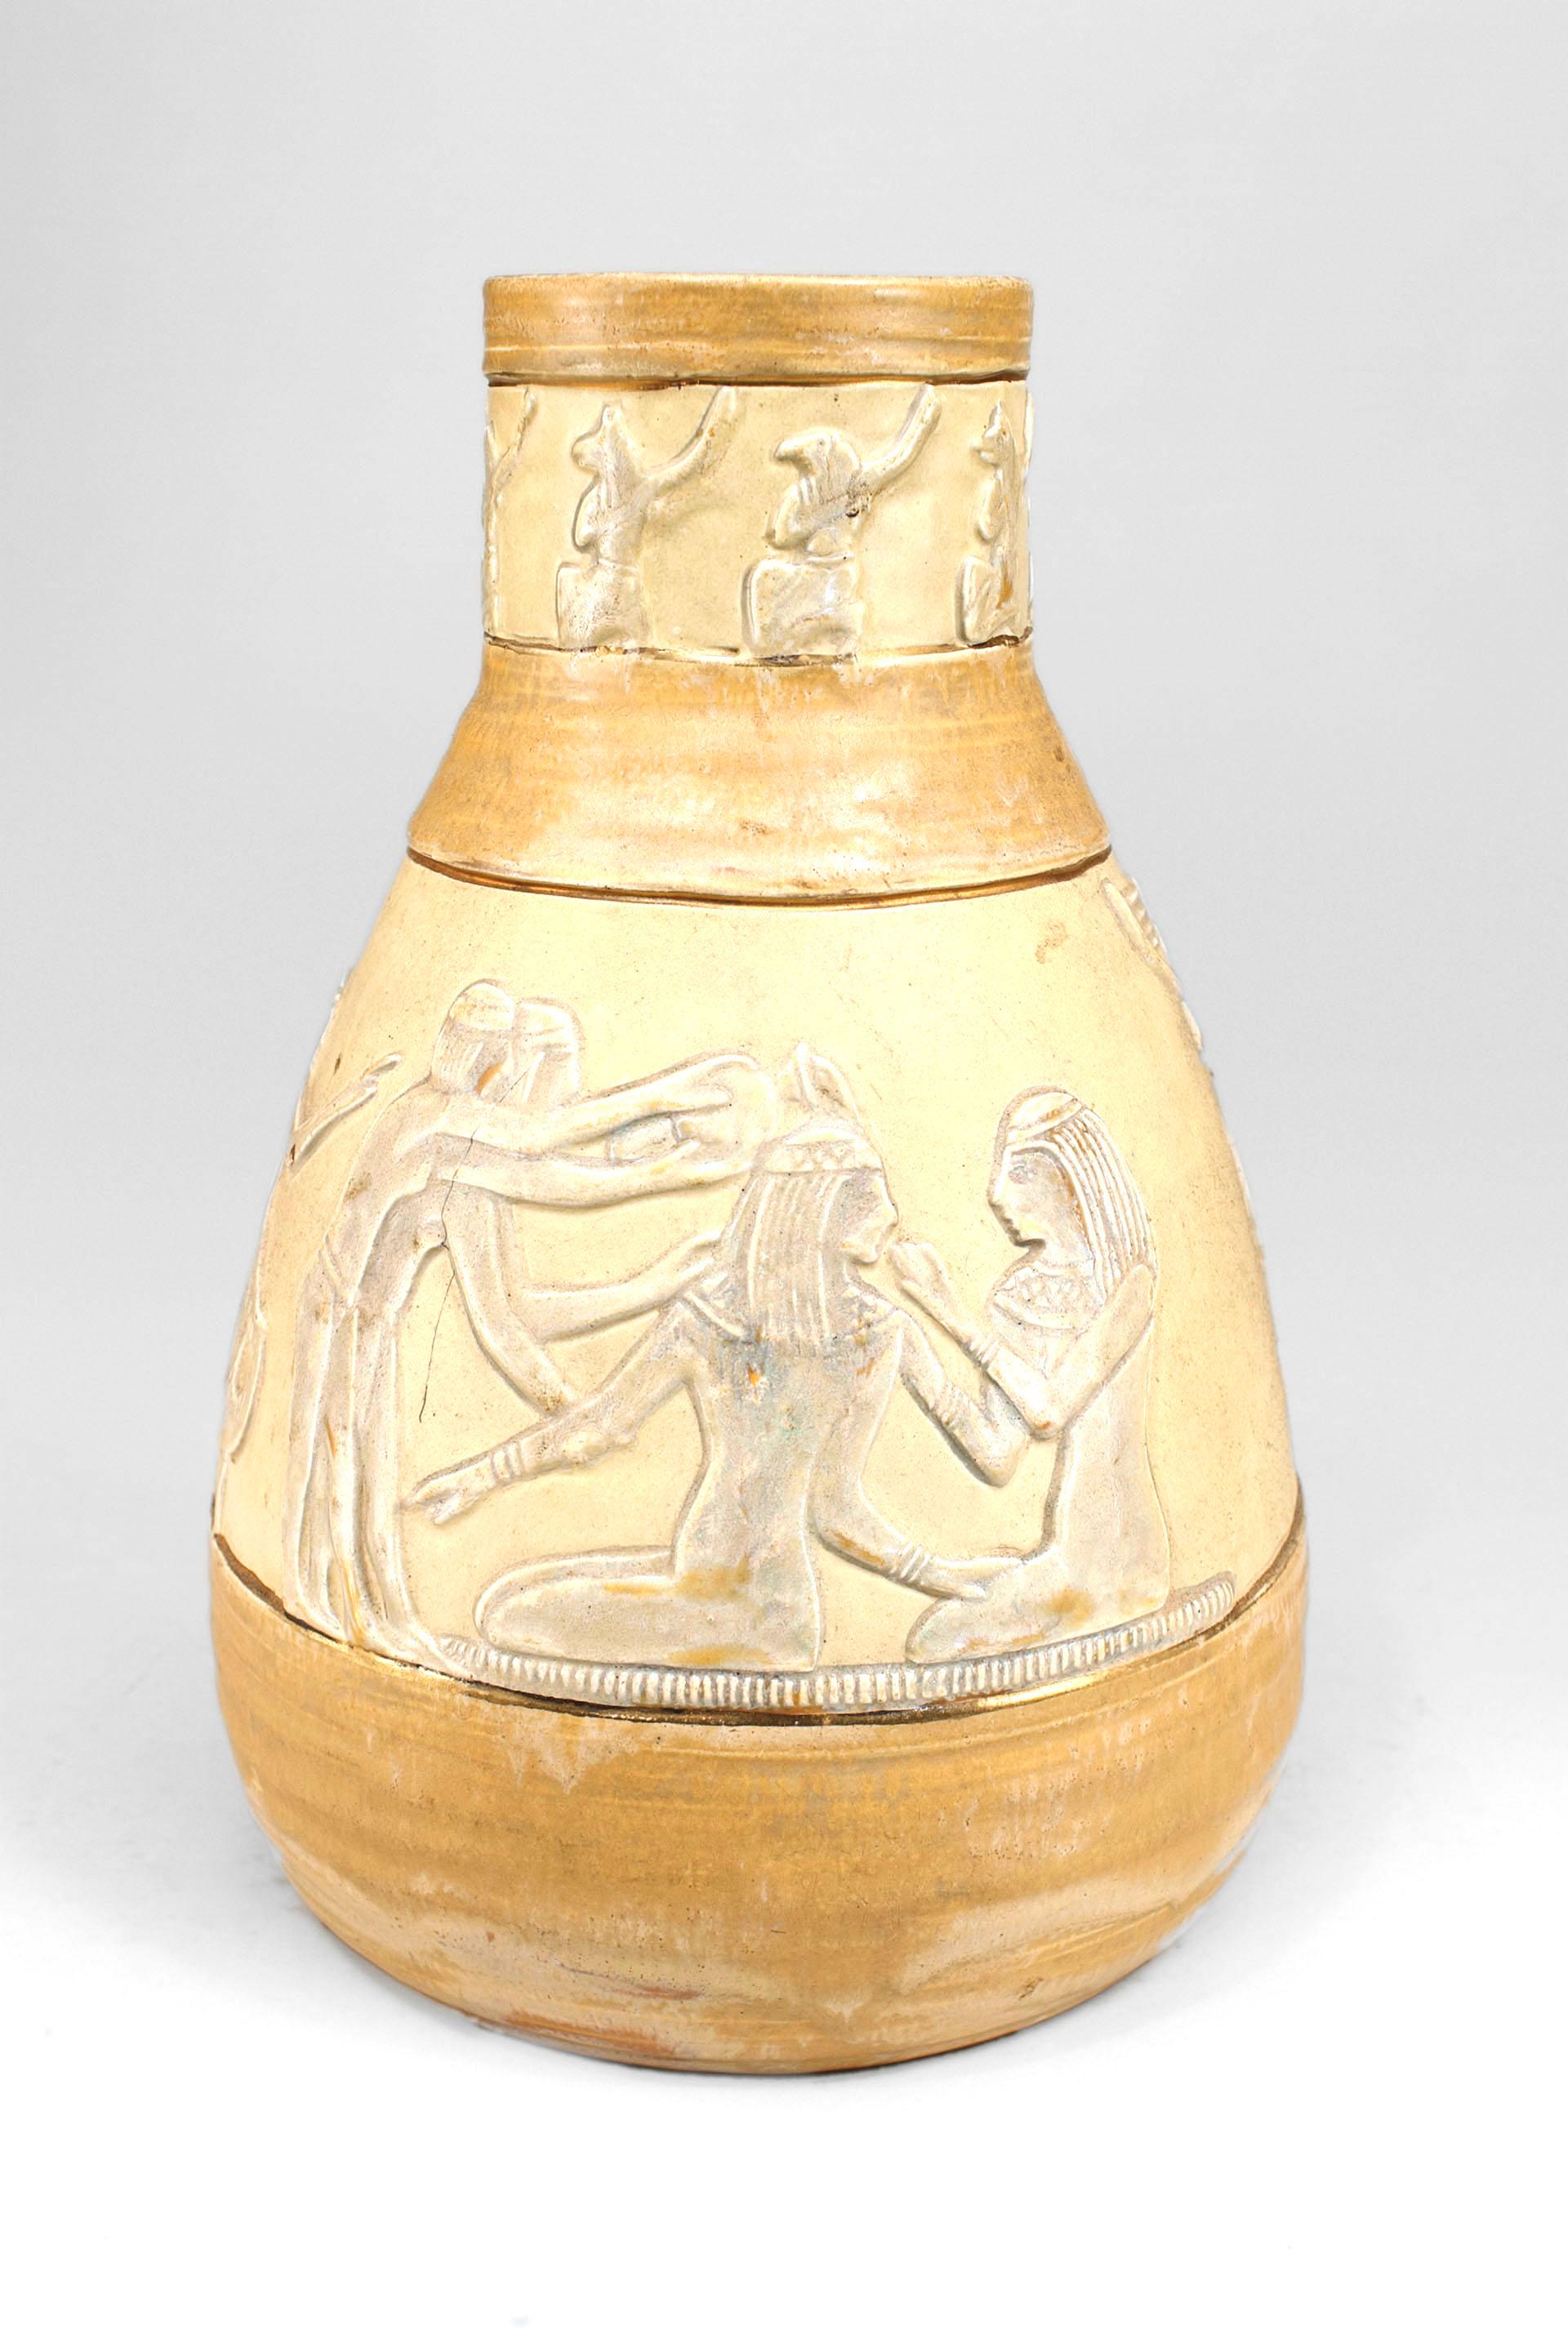 Austrian Art Deco beige & cream colored porcelain vase with glazed classical Egyptian figures around neck & body of vase. (att: JULES DRESSER).
   